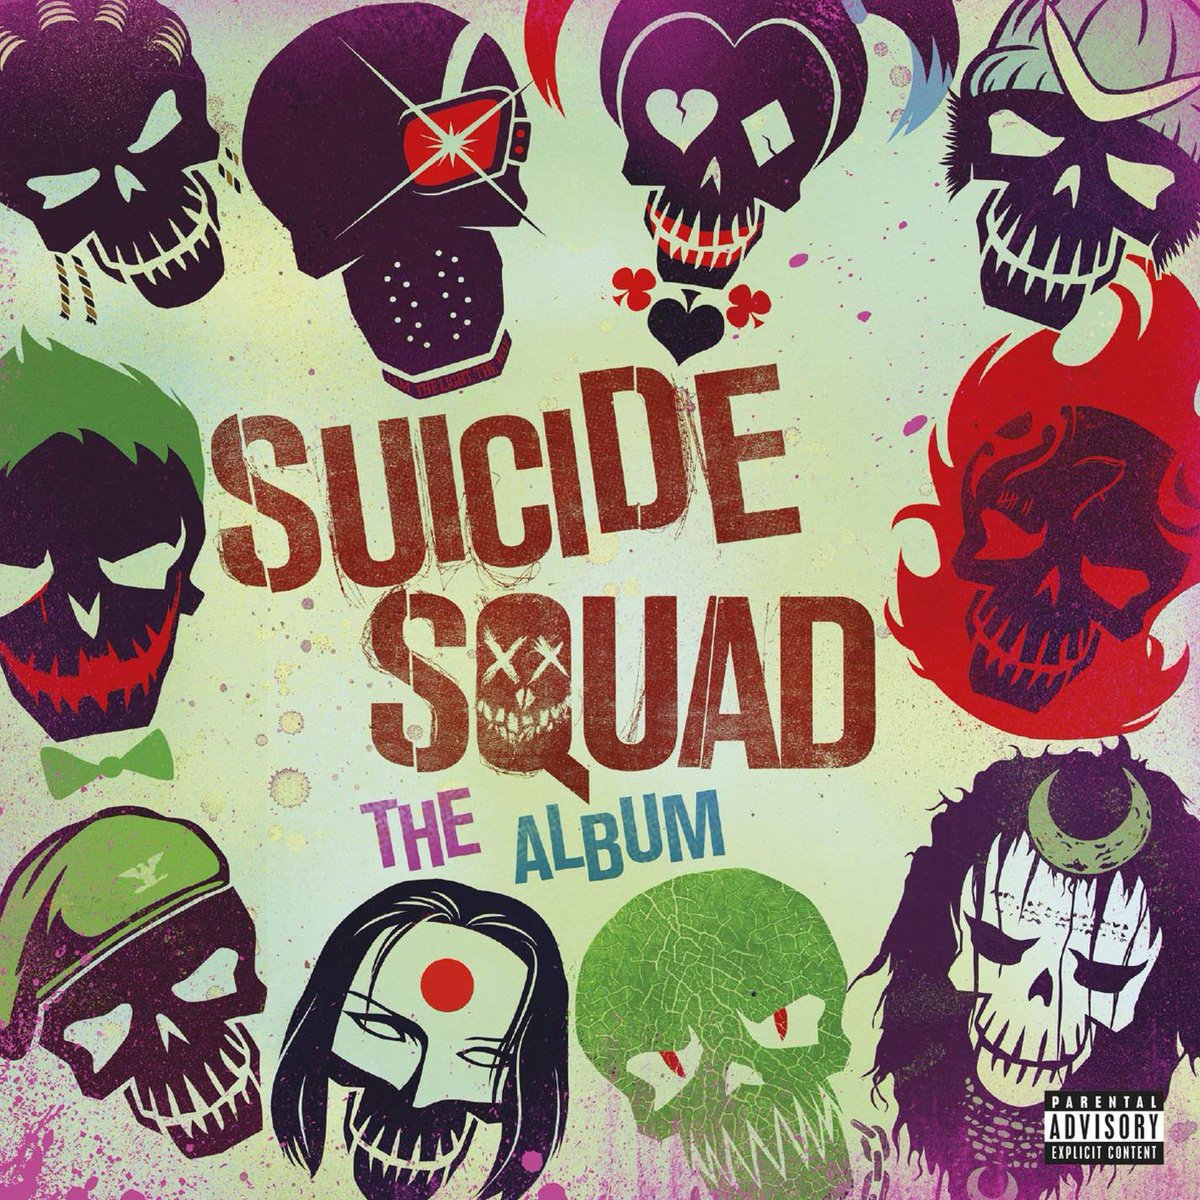 3. Suicide squad: The album - various artists